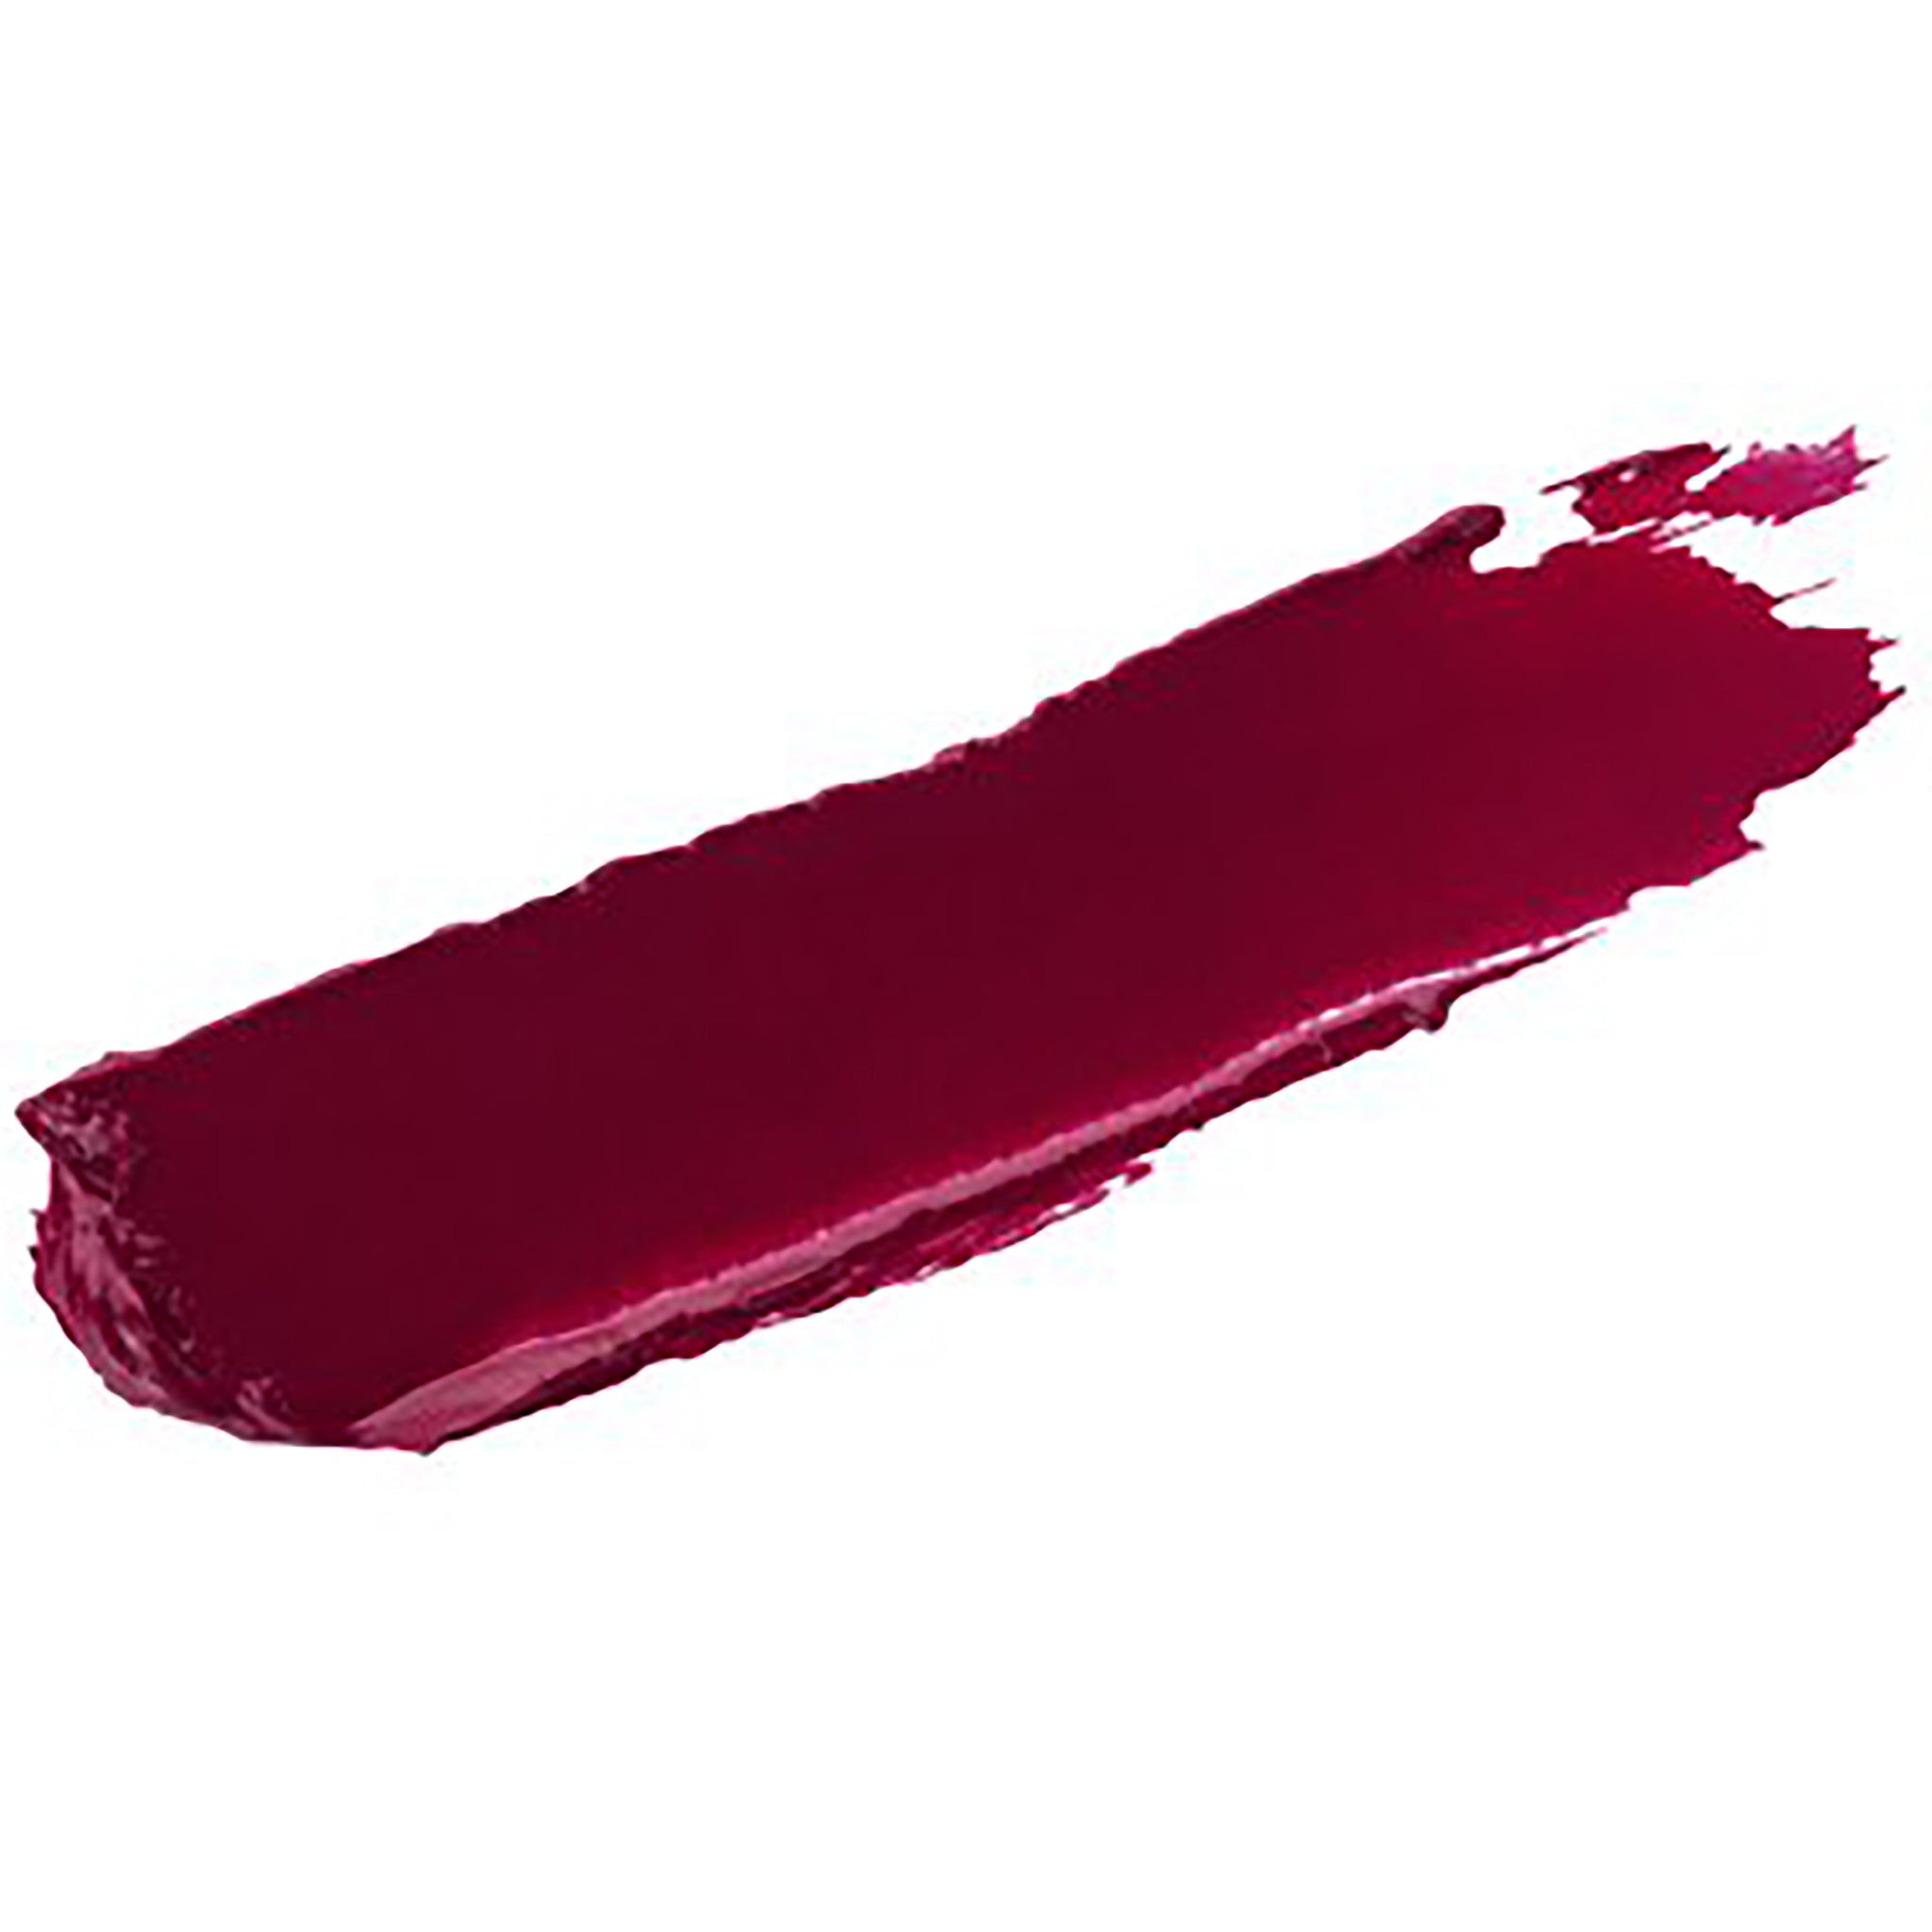 Natural Lipstick - mypure.co.uk